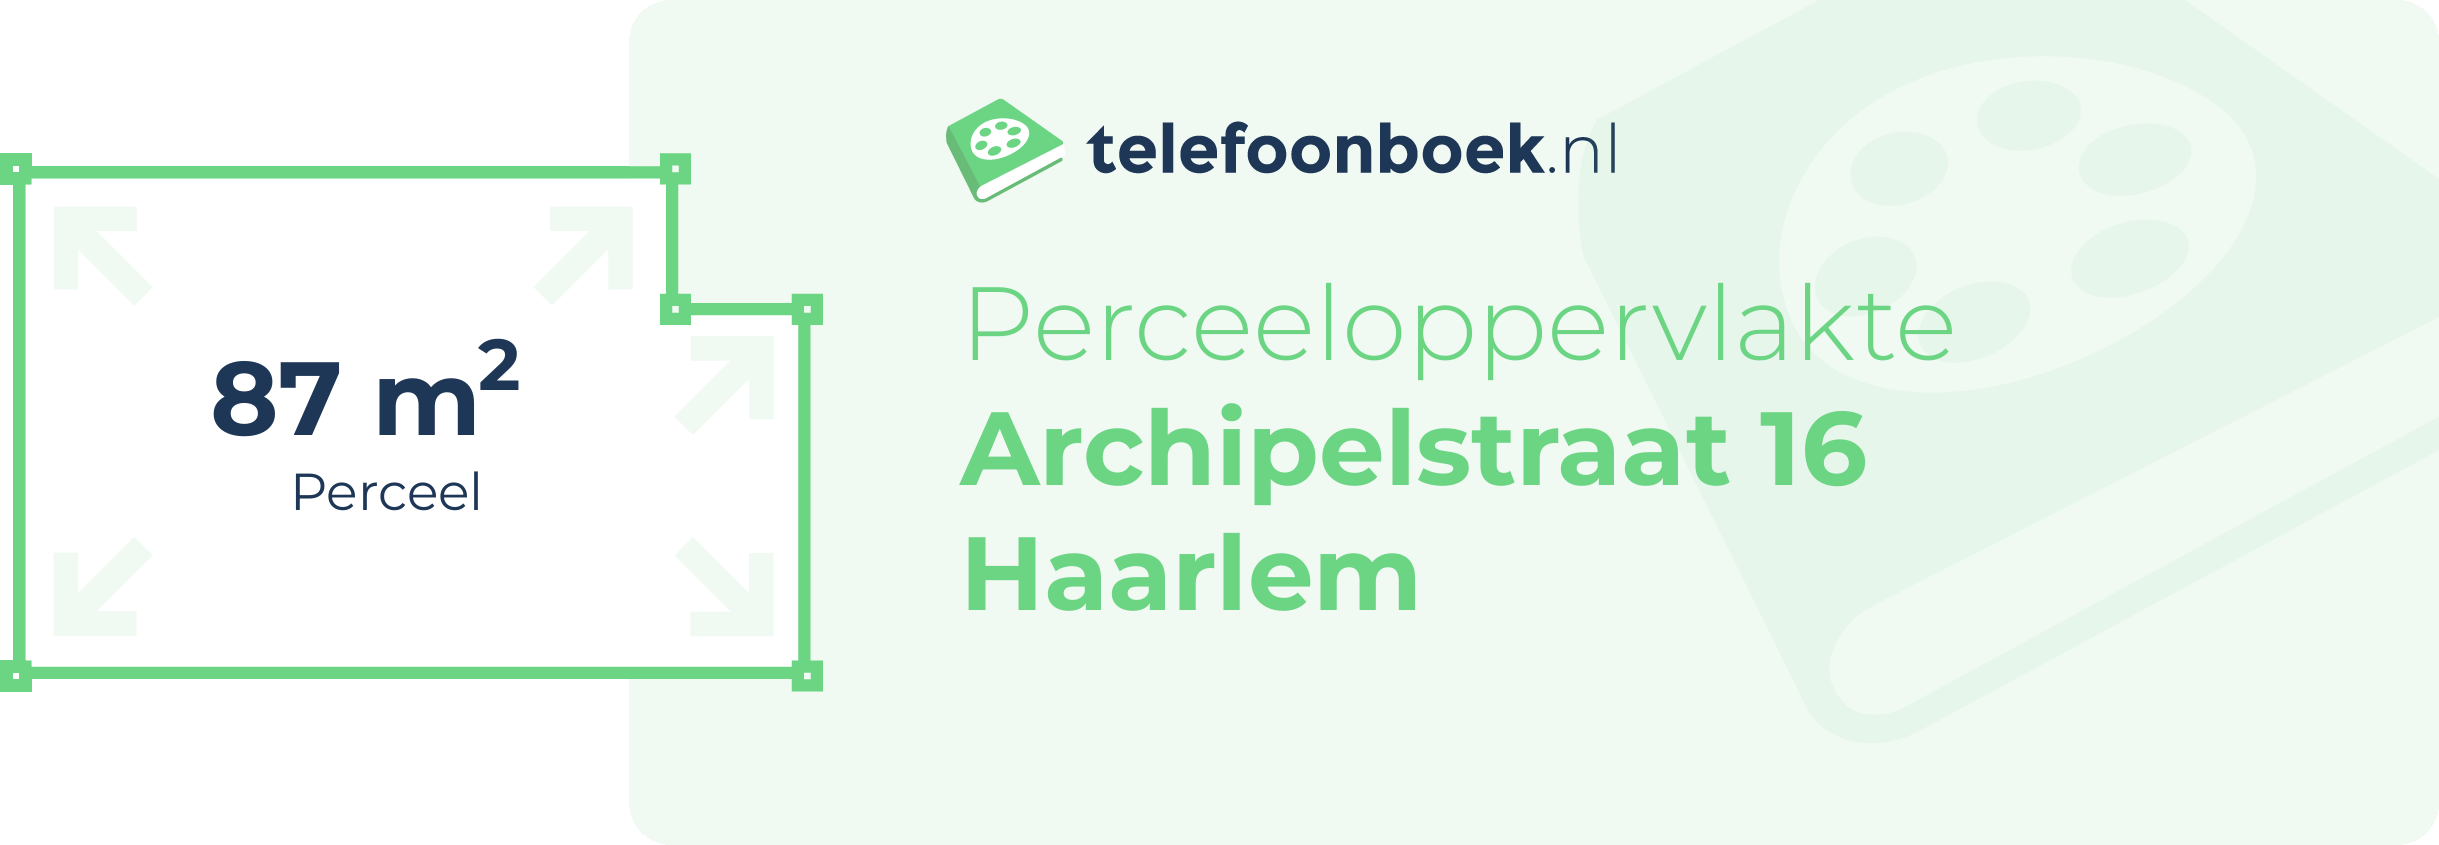 Perceeloppervlakte Archipelstraat 16 Haarlem